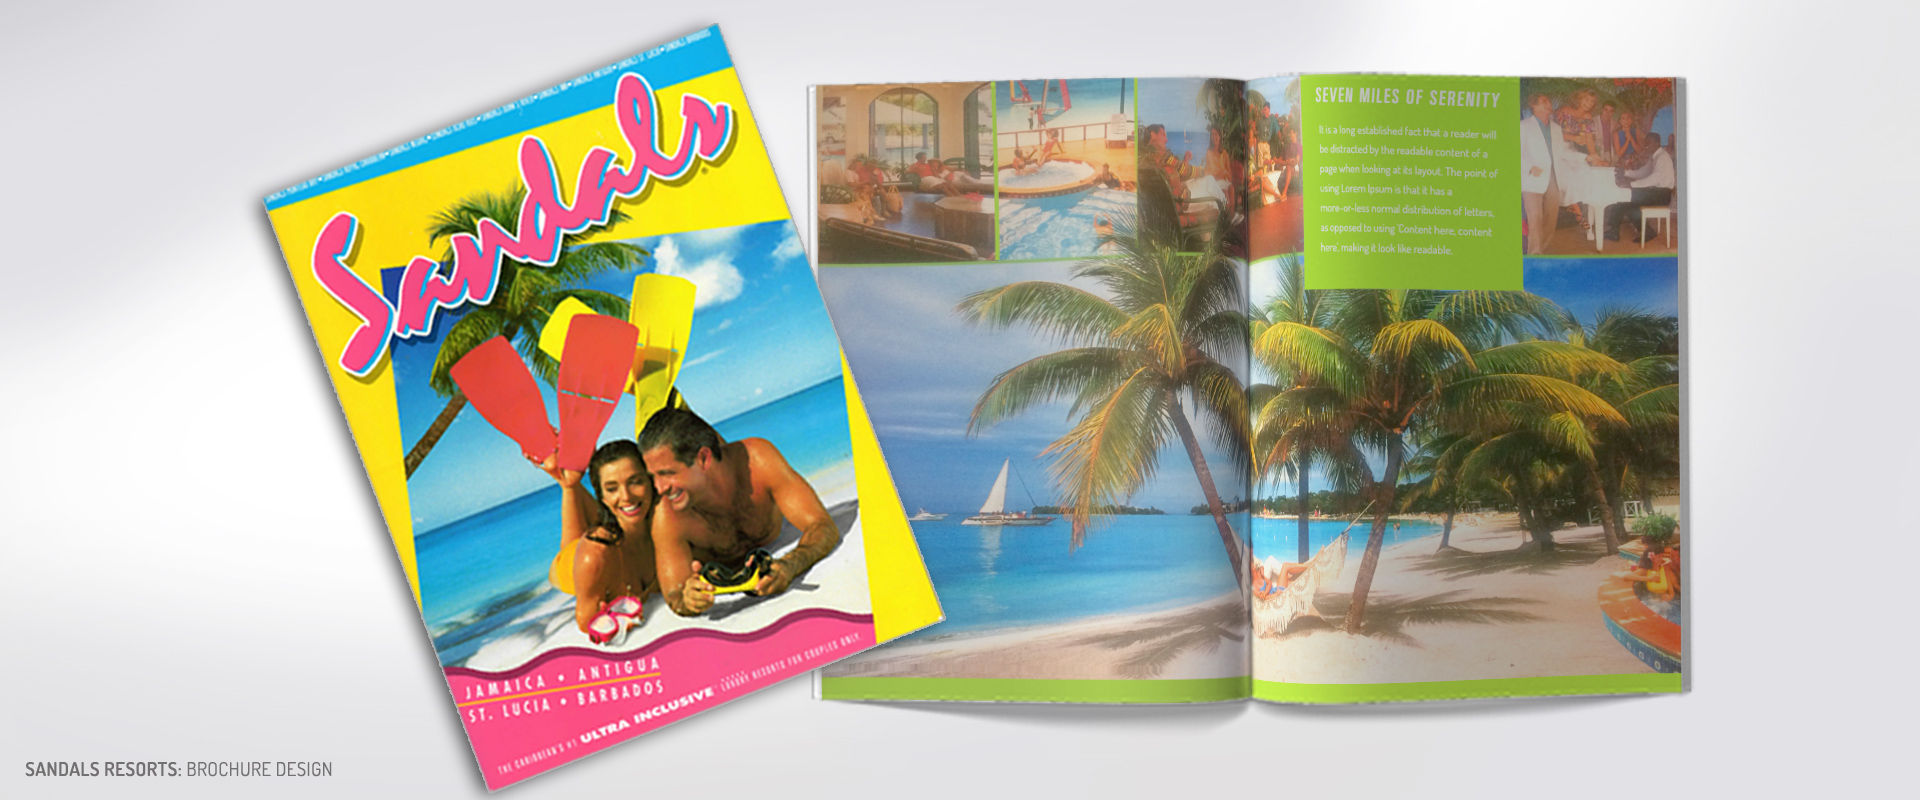 Sandals Resorts: Brochure Design